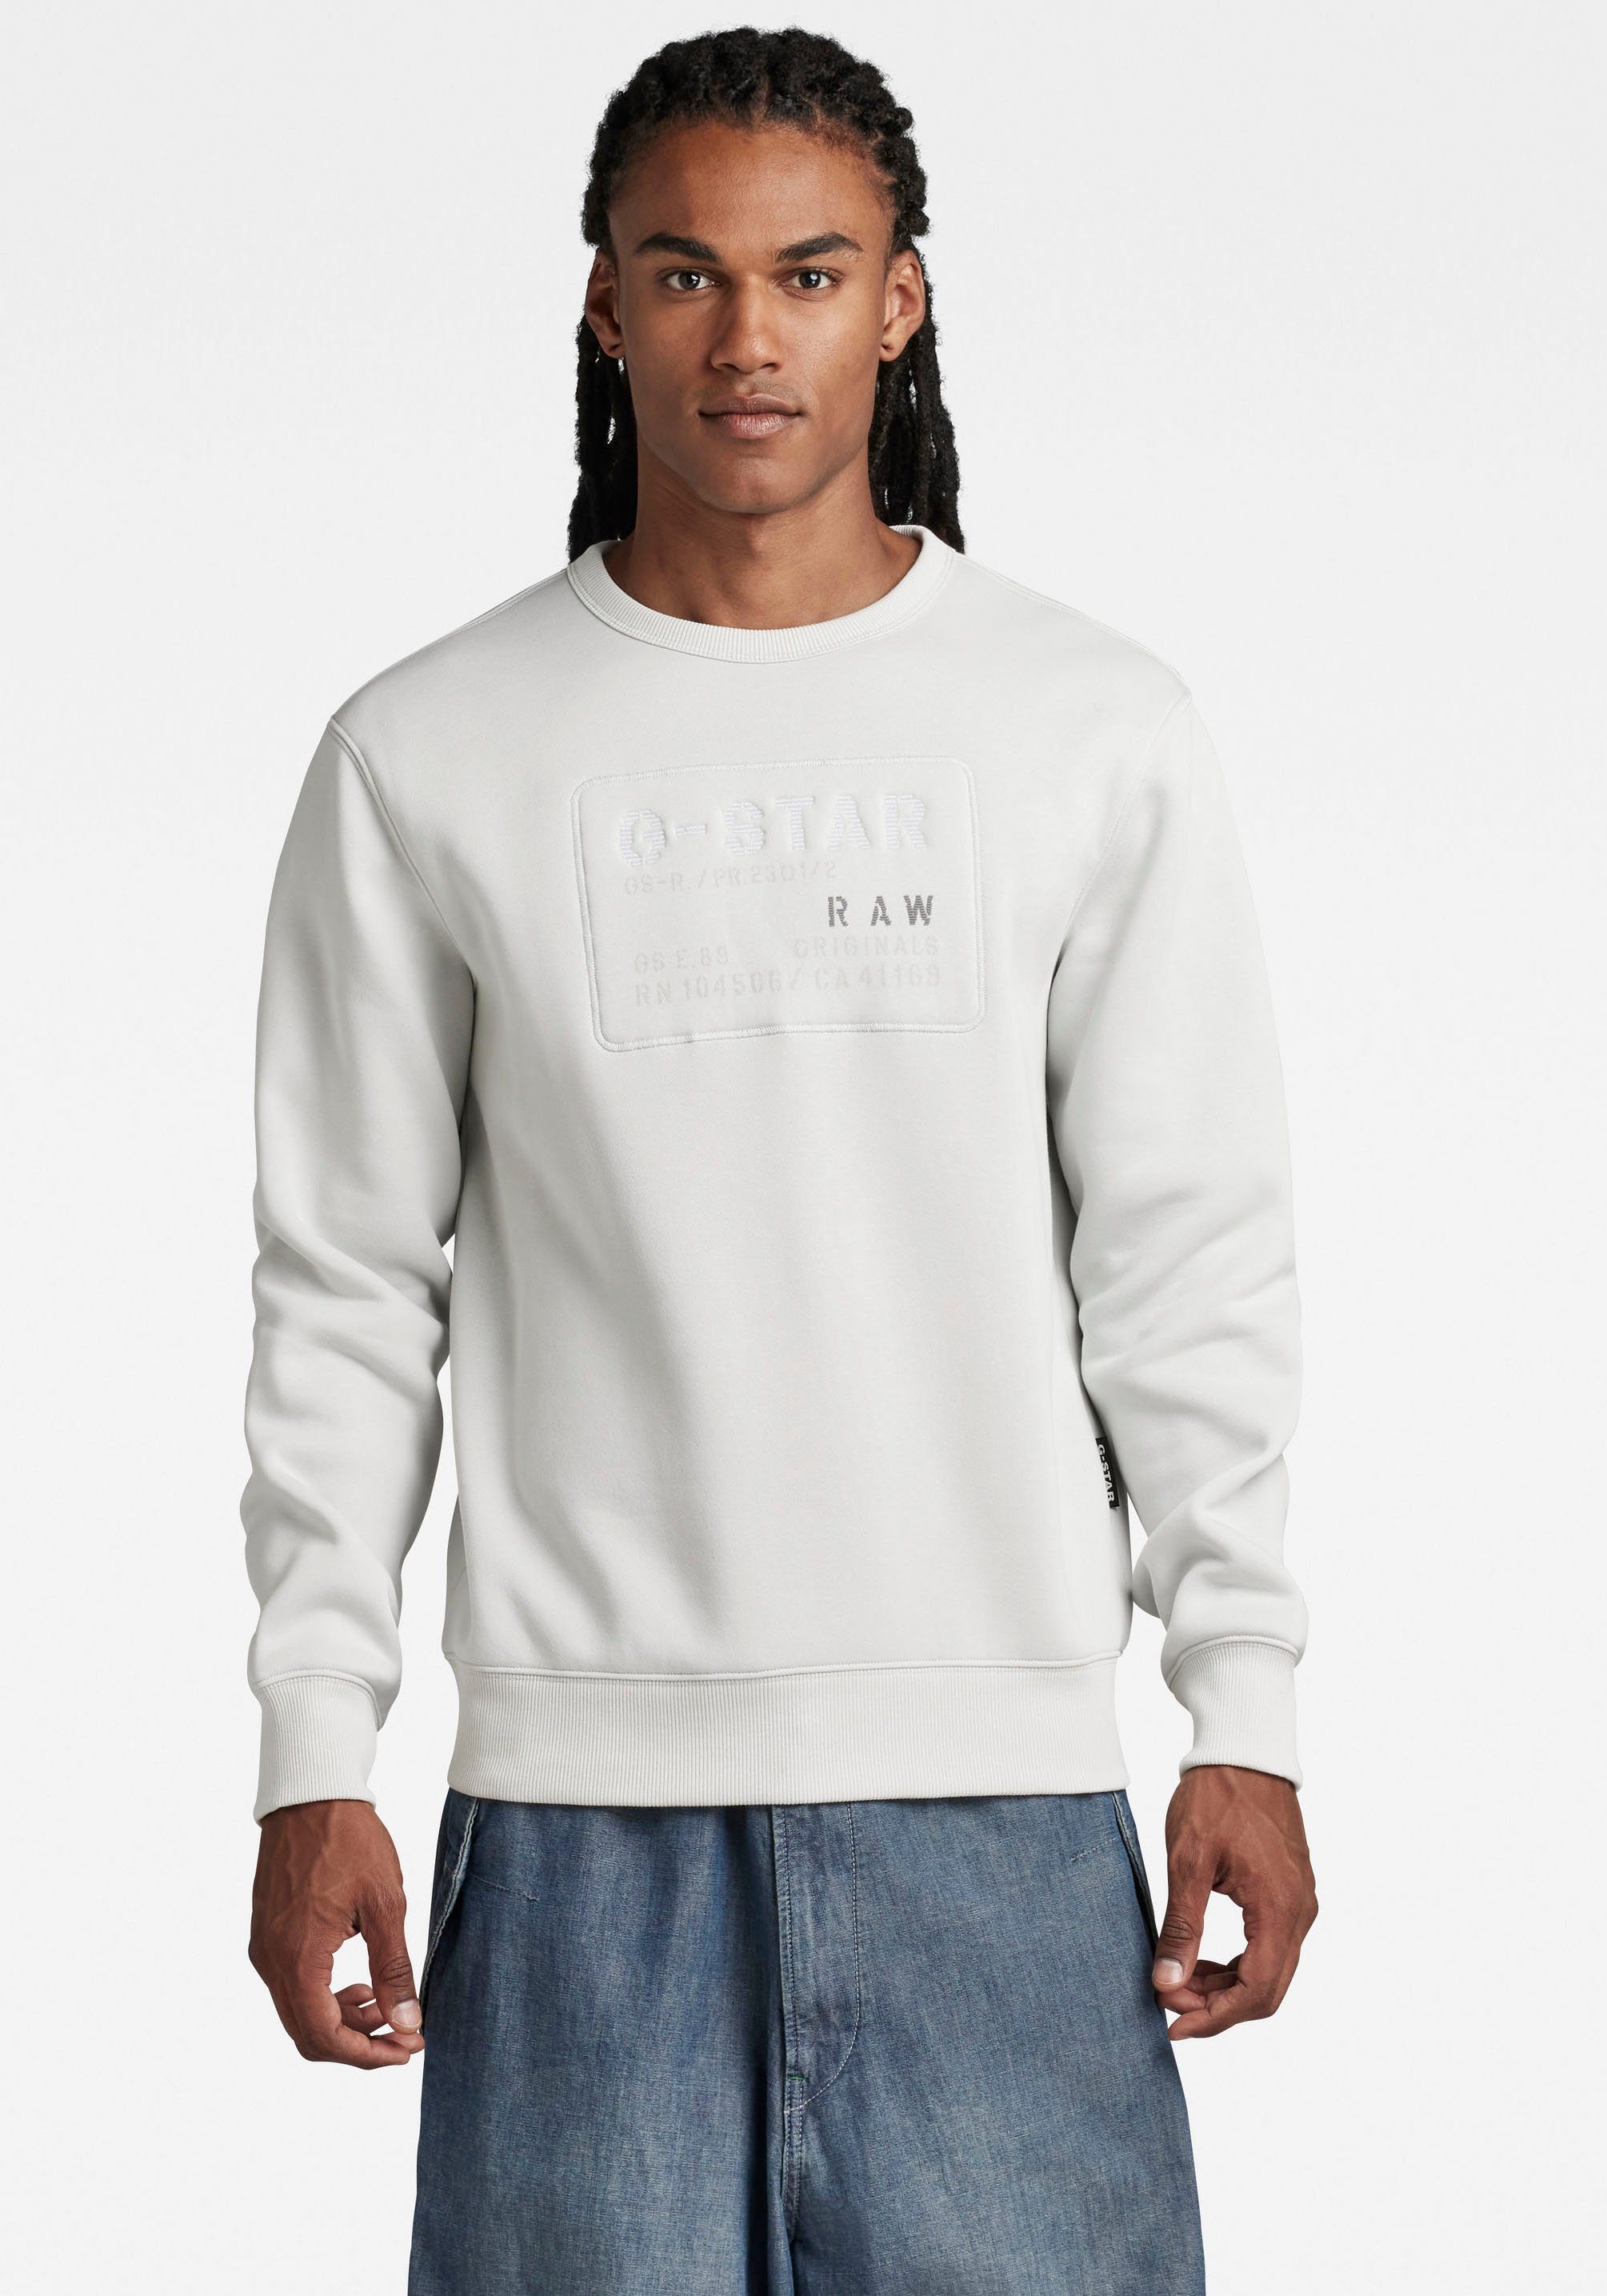 G-Star RAW Sweatshirt Sweatshirt Originals mushroom Oyster